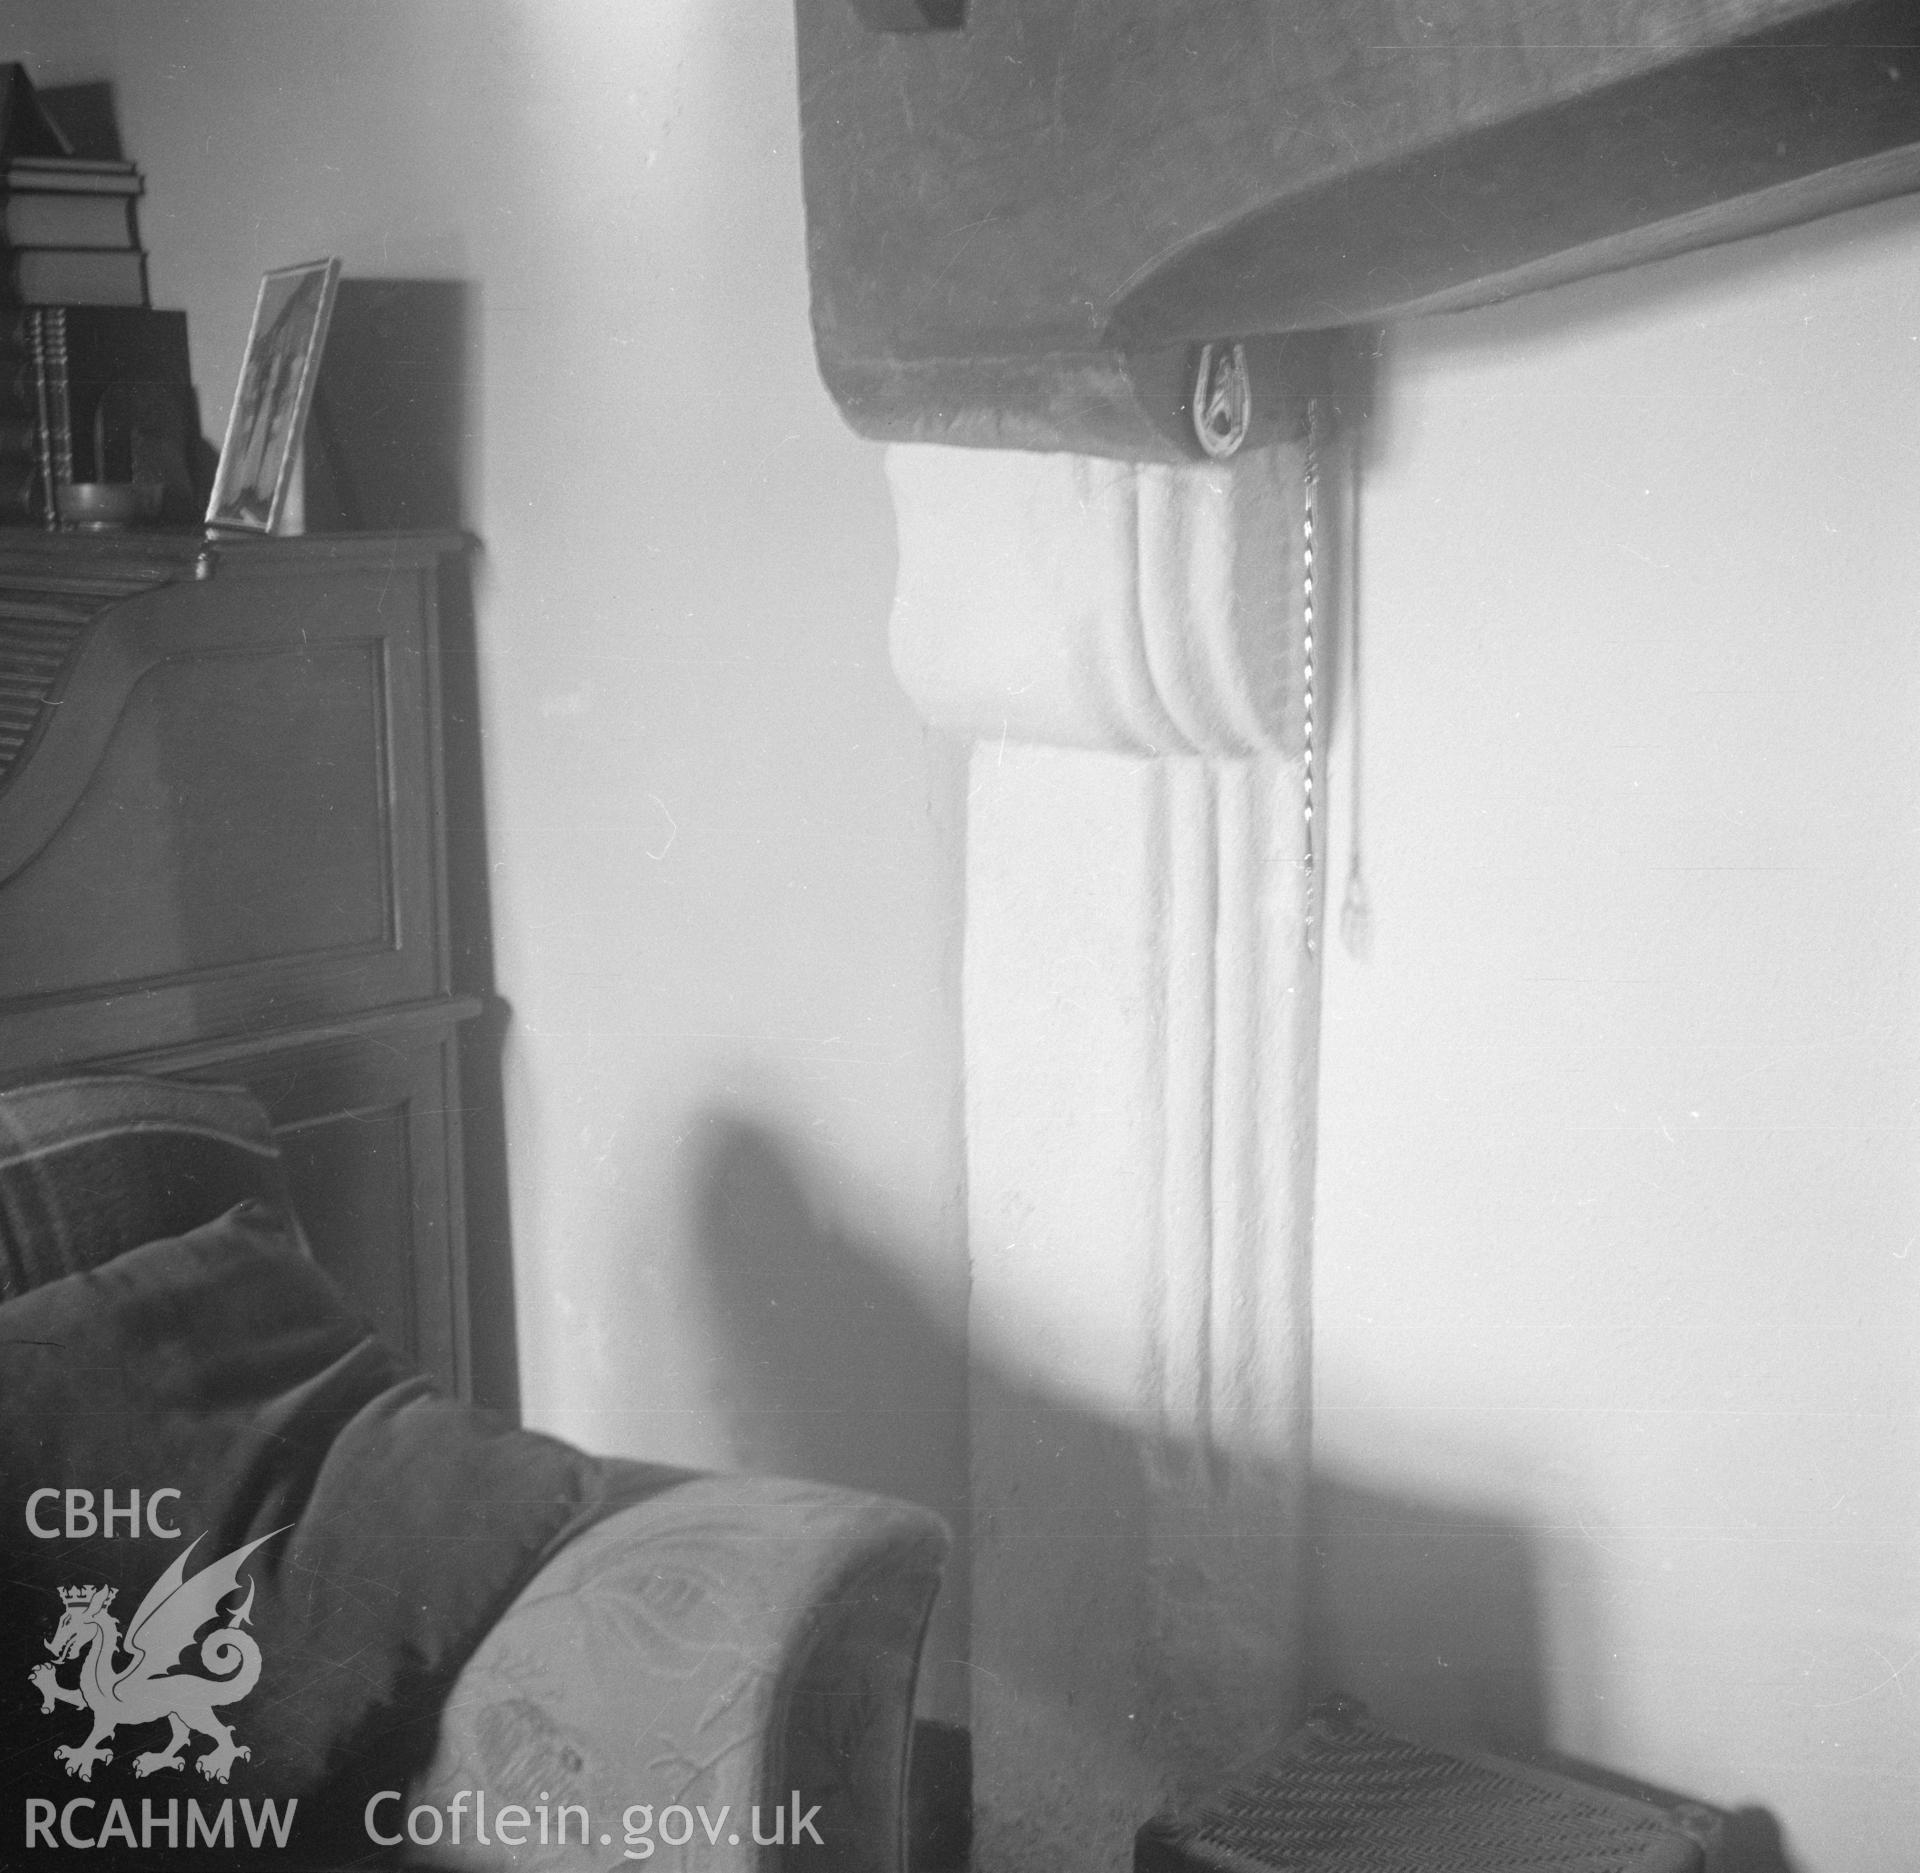 Digital copy of a nitrate negative showing fireplace at Lower Berse near Wrexham, Denbighshire.